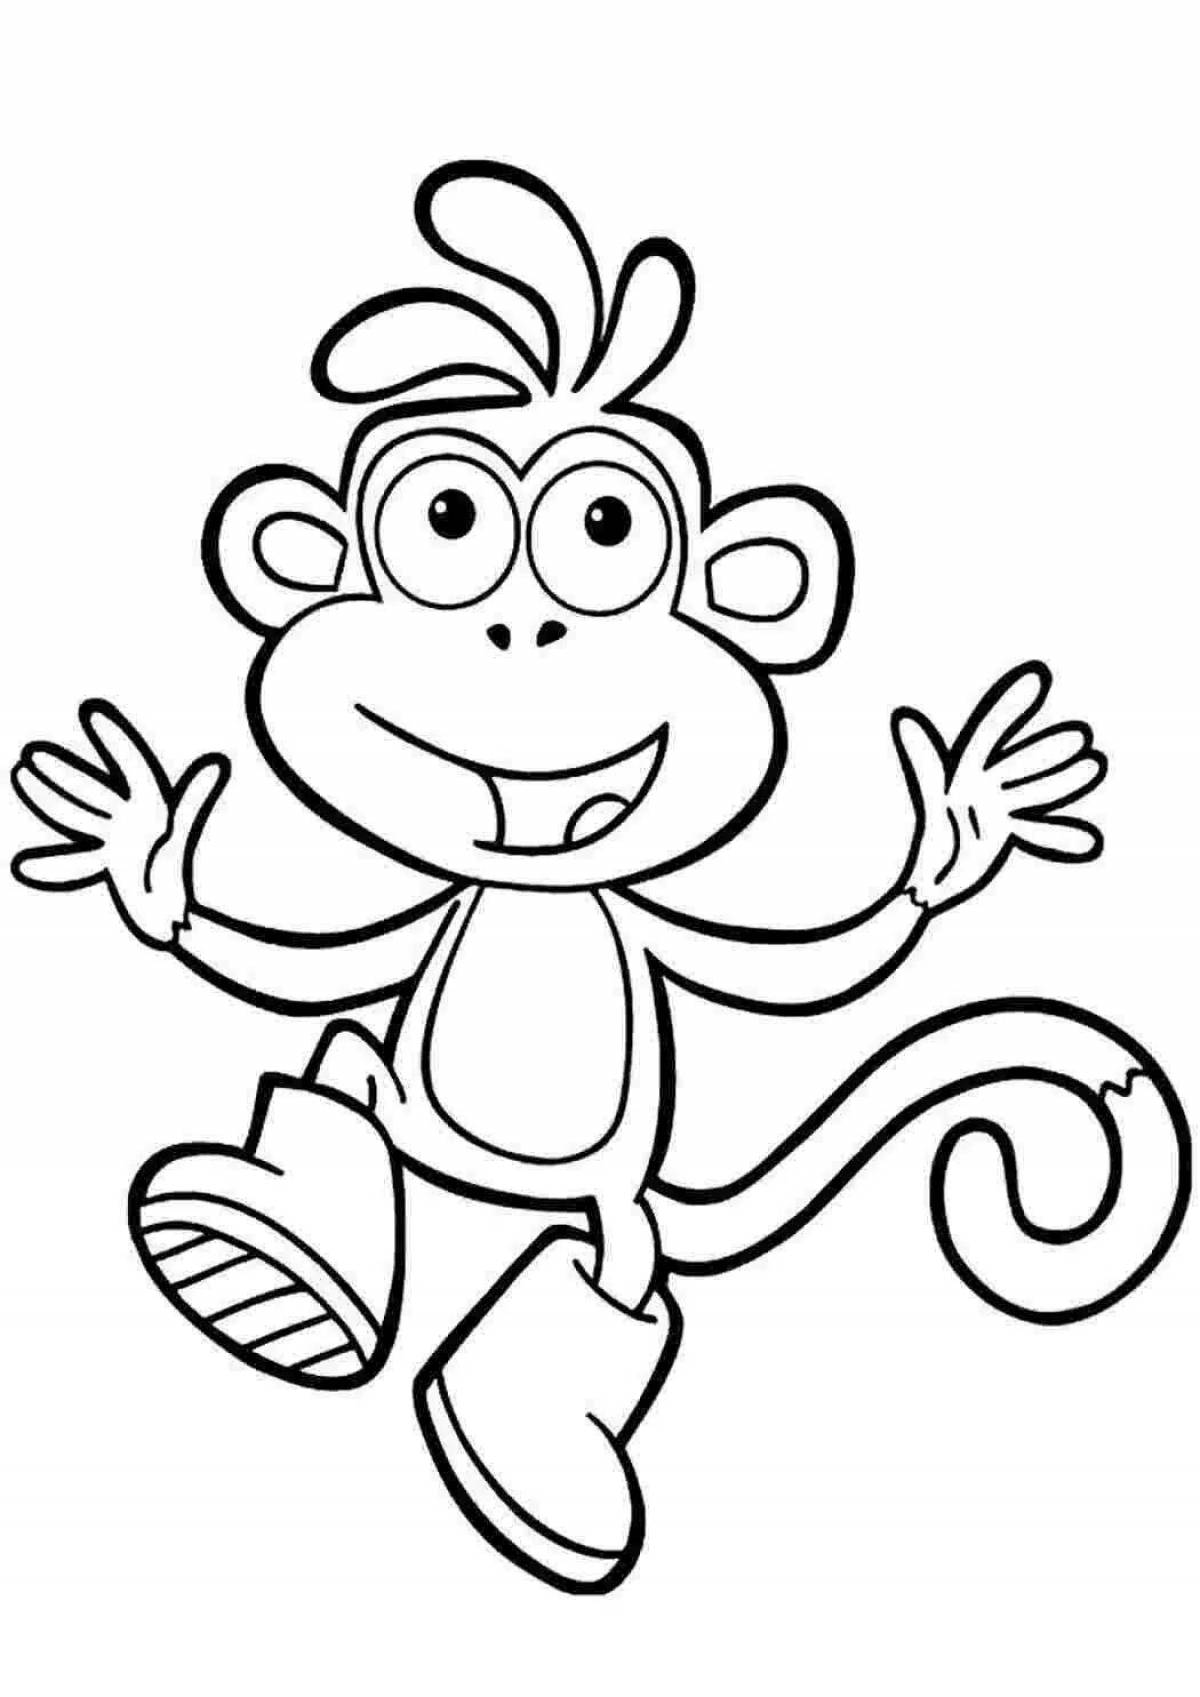 Великолепная раскраска обезьяна